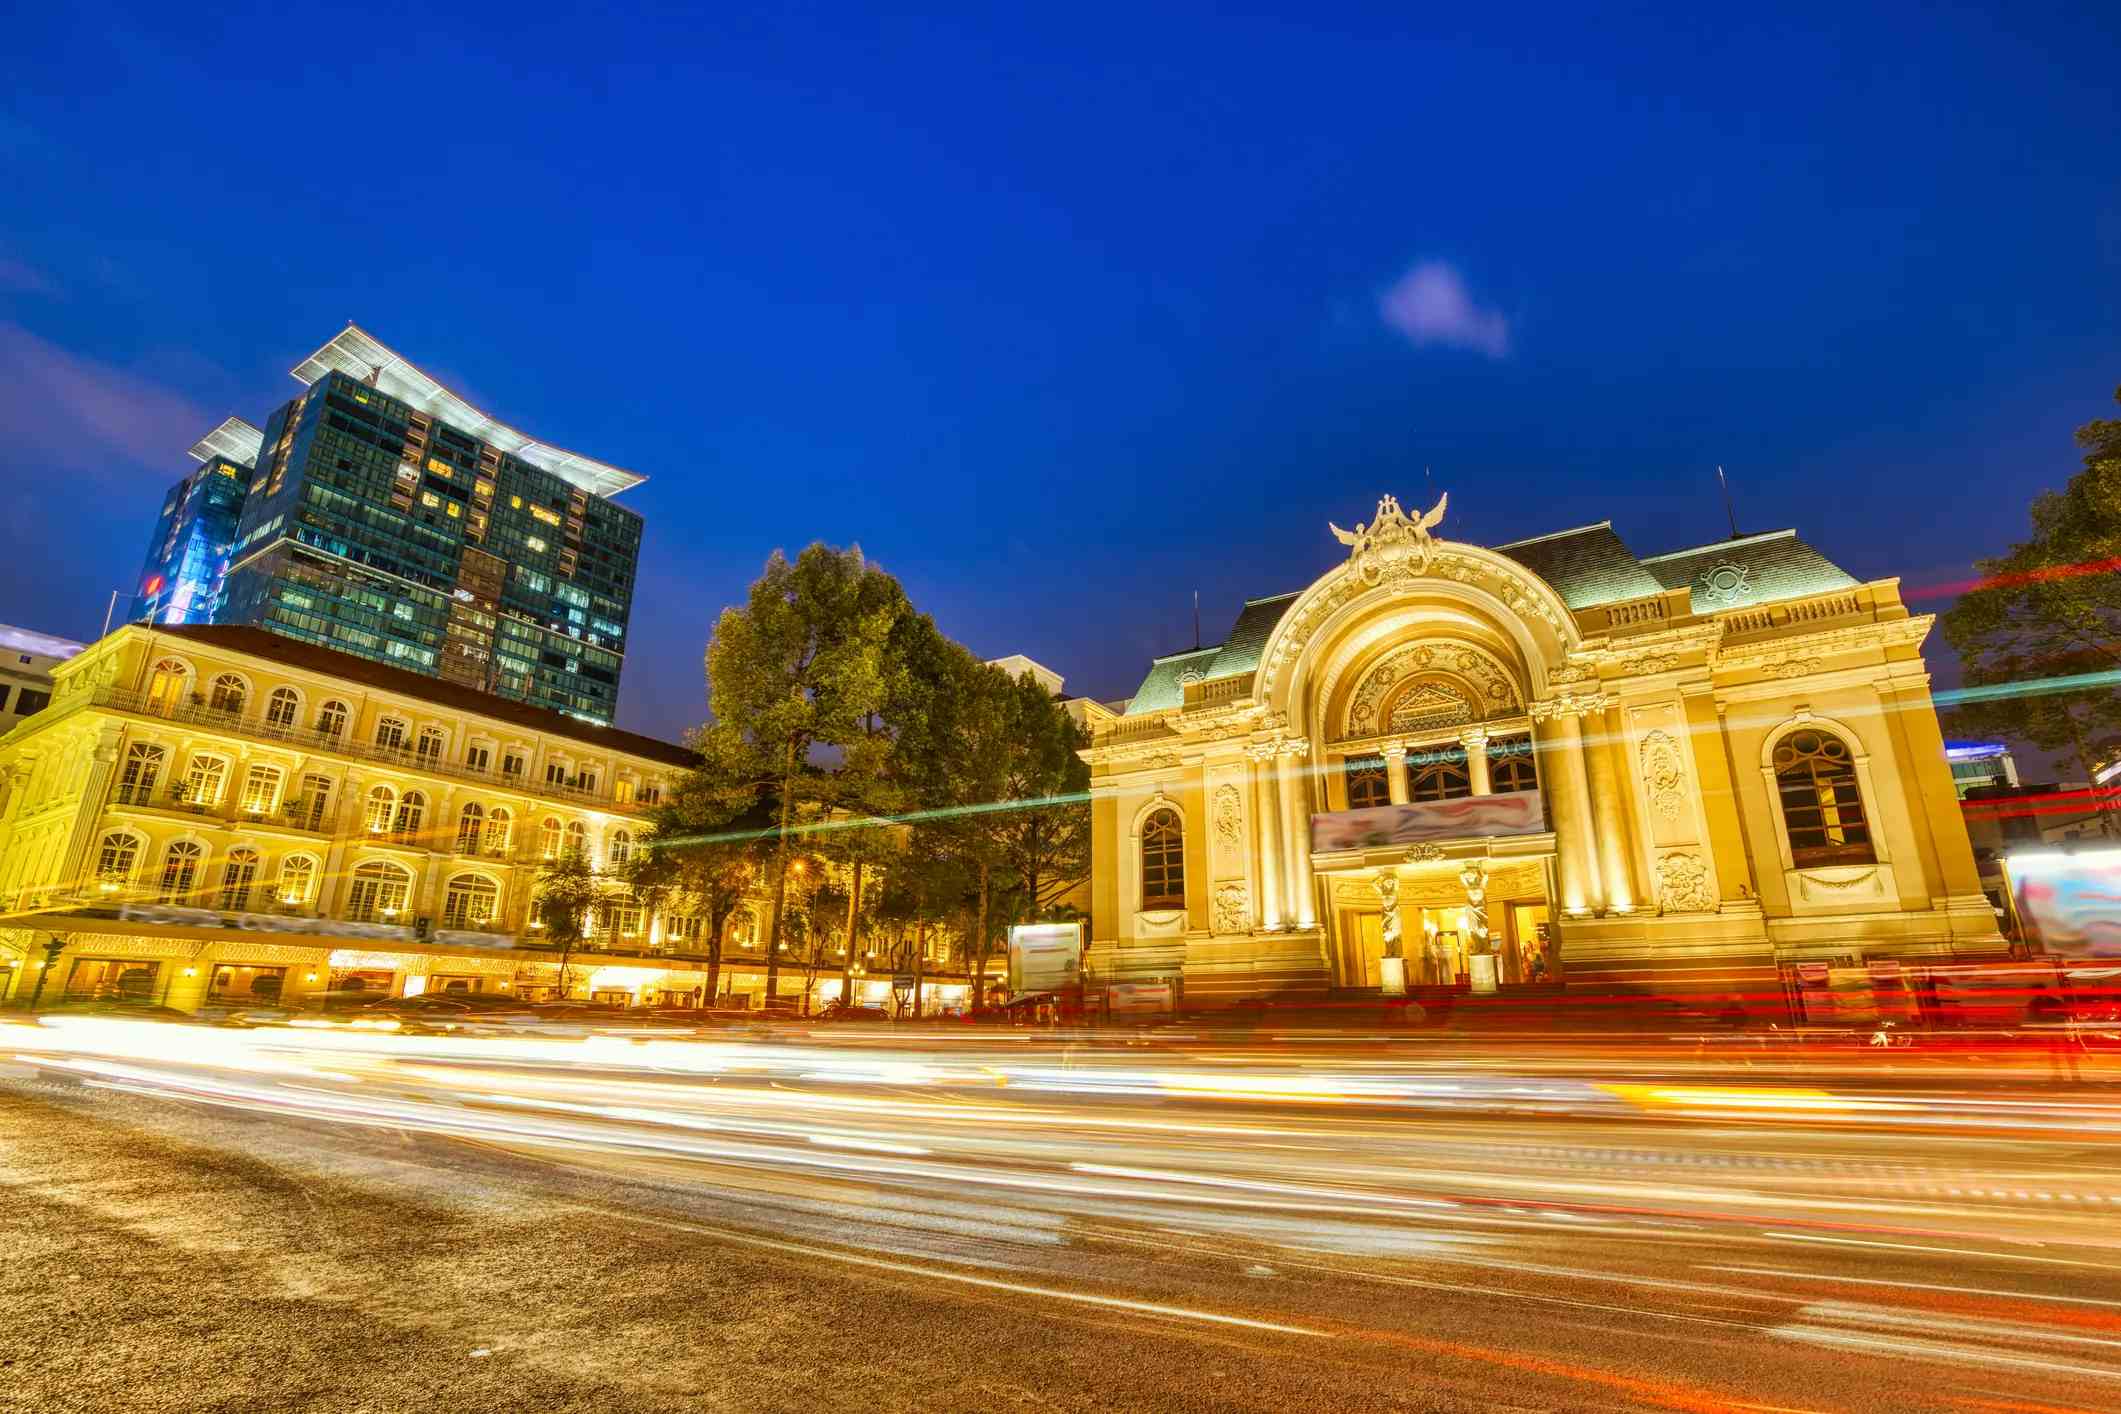 Ho Chi Minh City Opera House image